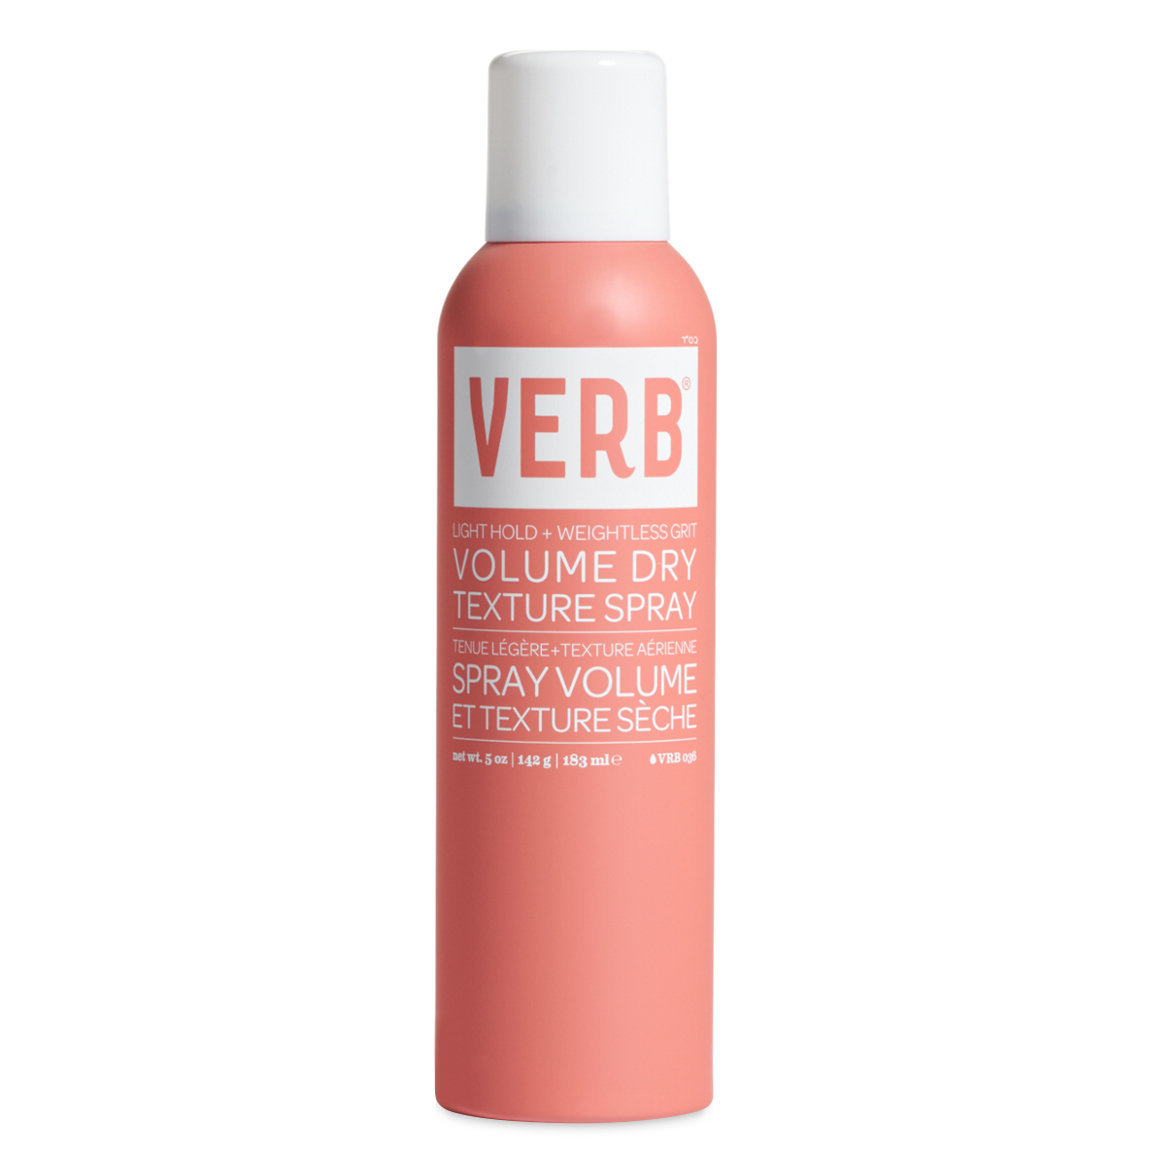 Verb Volume Dry Texture Spray alternative view 1 - product swatch.